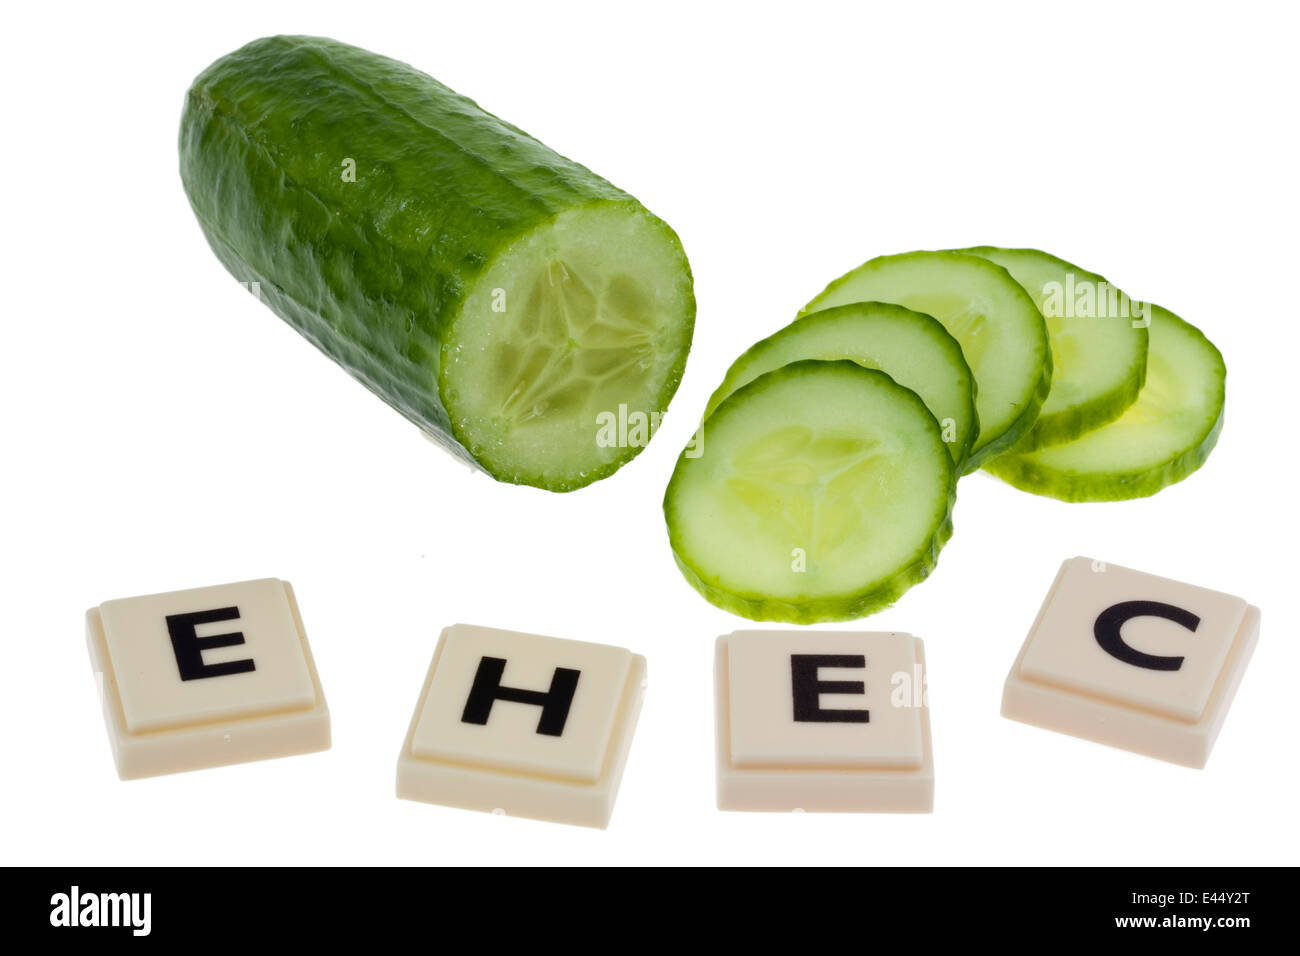 A cucumber as a symbol of EHEC disease Stock Photo